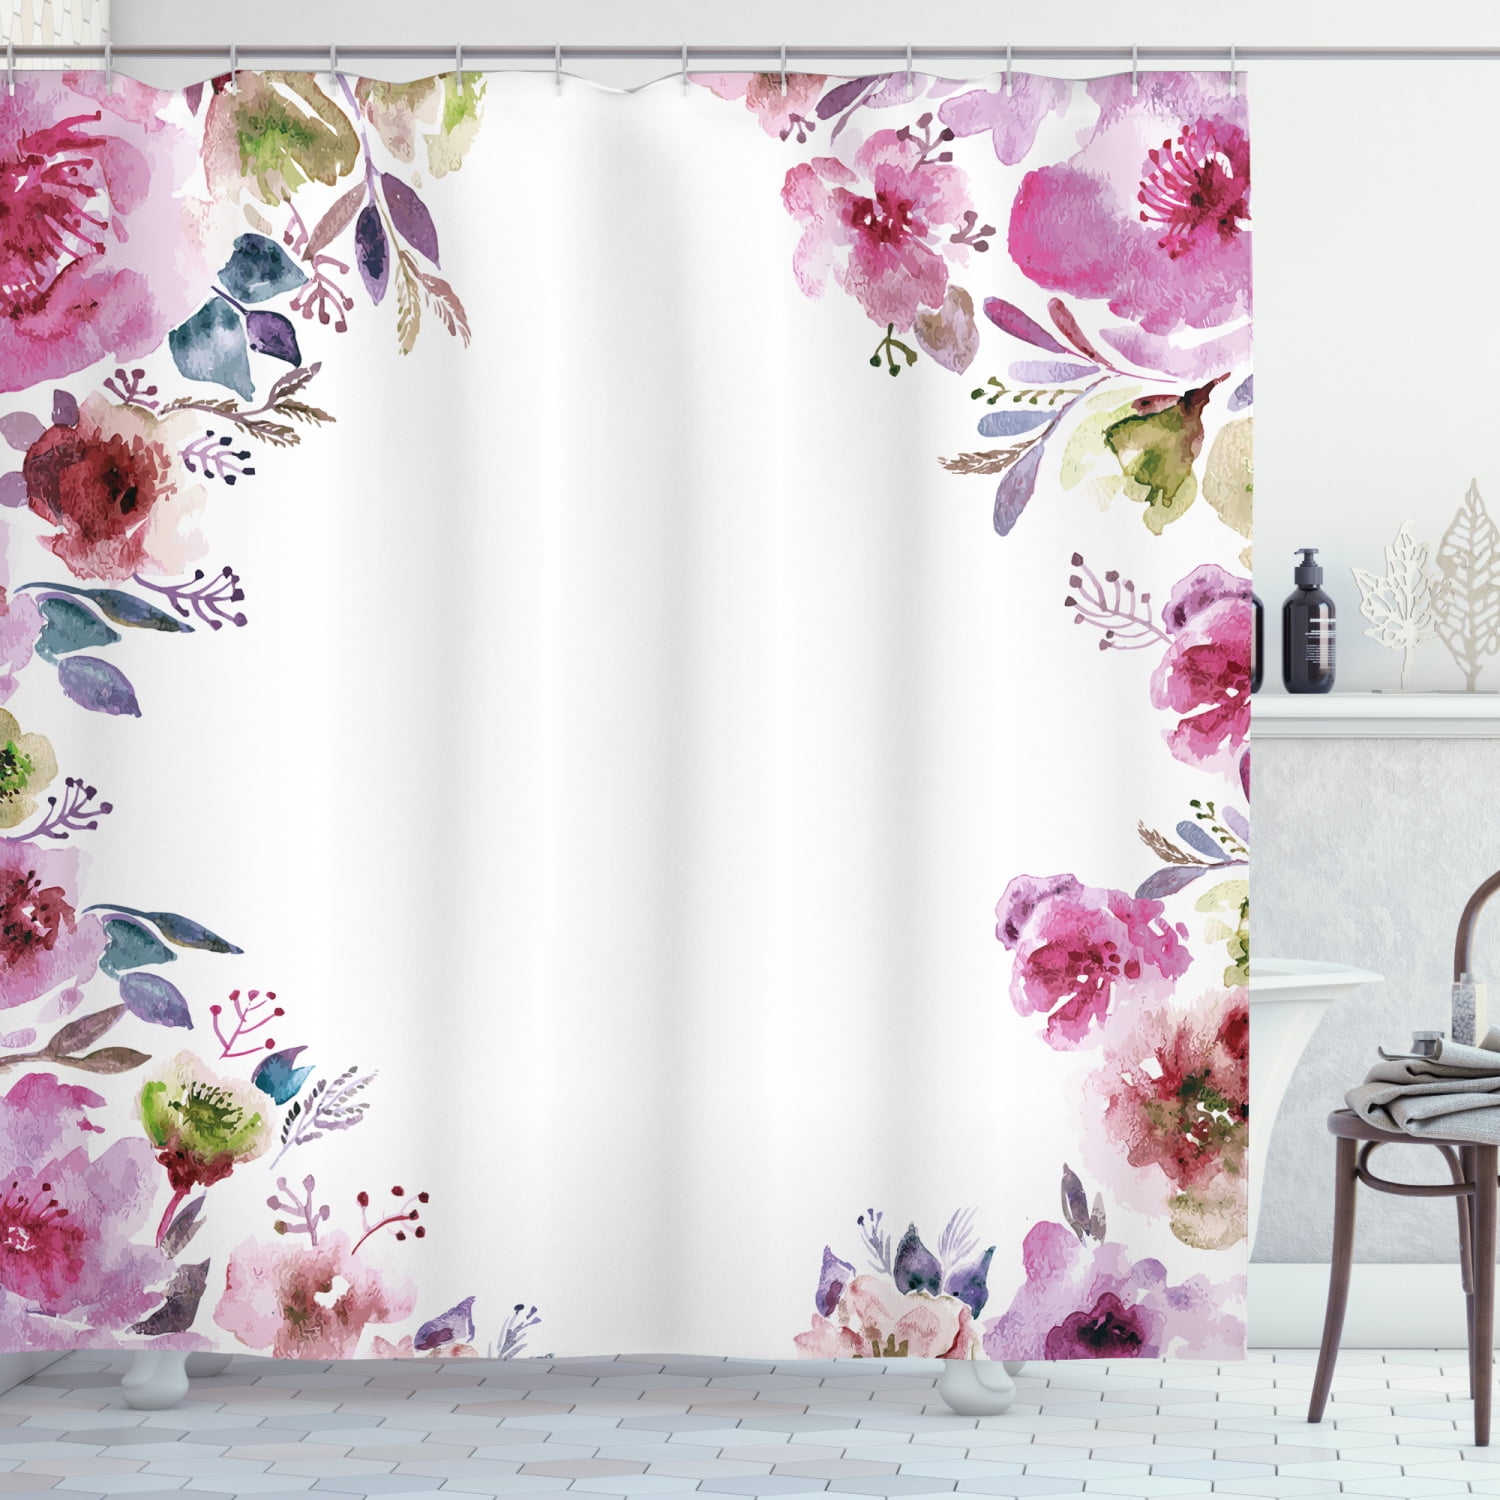 Details about   Live Laugh Love Shower Curtain Floral Sketchs Print for Bathroom 